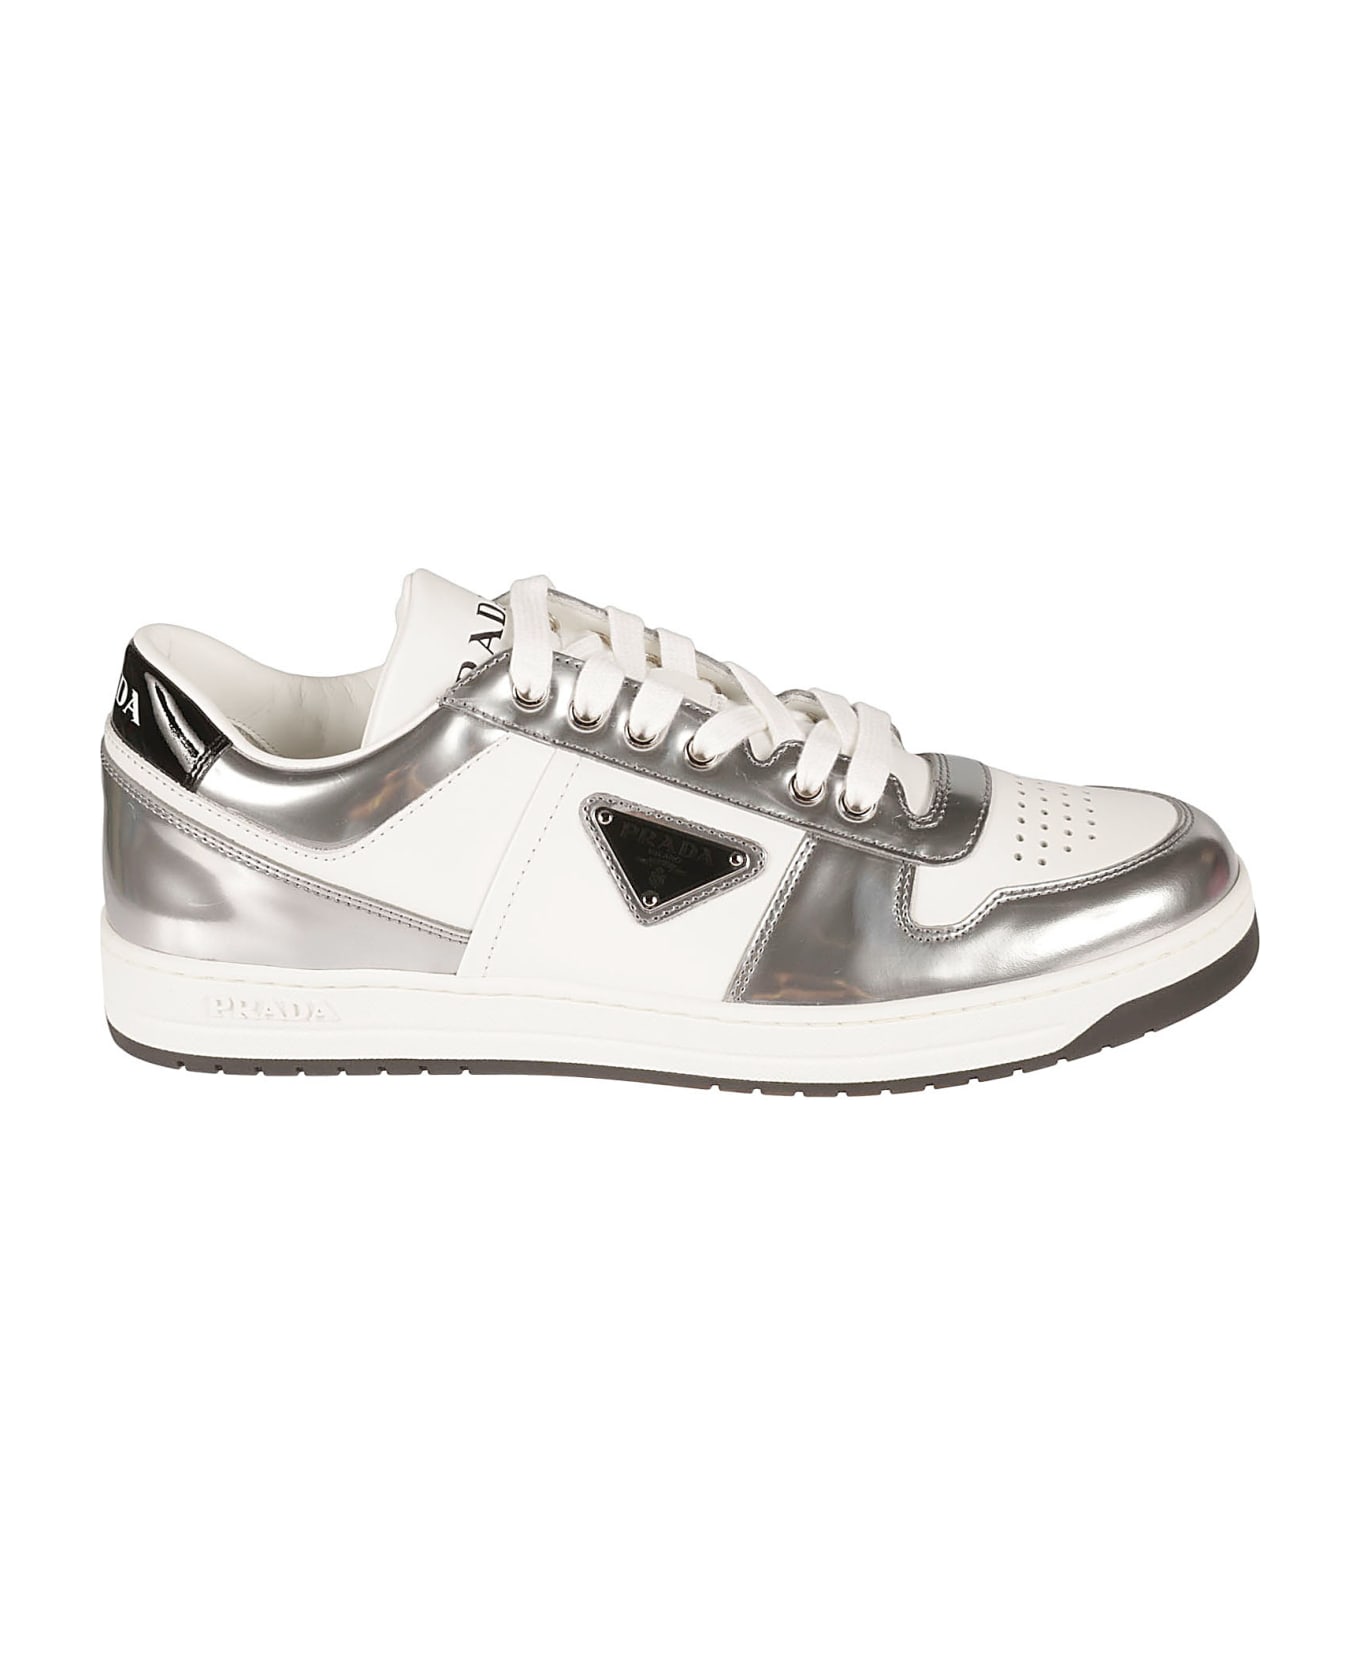 Prada Logo Sided Paneled Sneakers - White/Silver